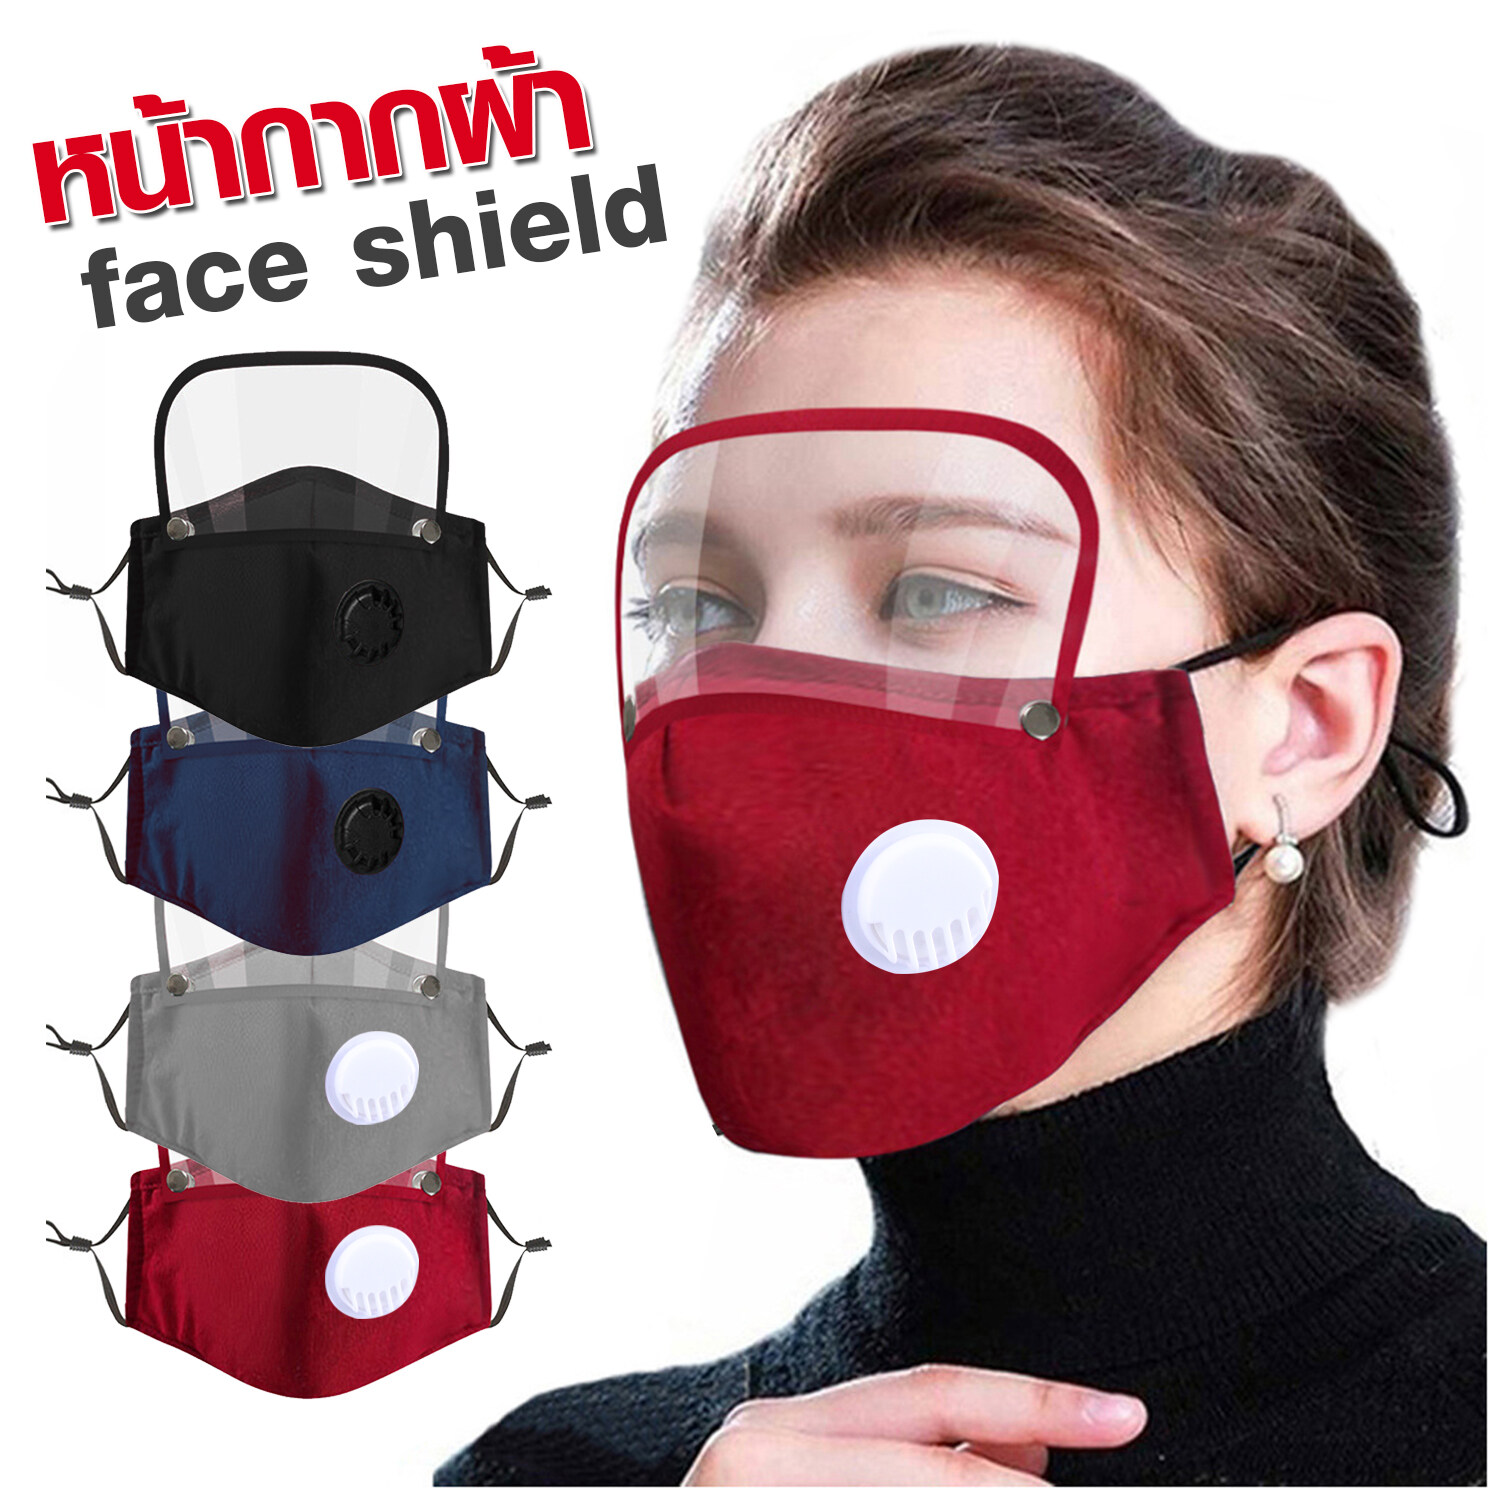 HHsociety หน้ากากผ้า face shield เฟสชิลด์ เฟสชิว หน้ากากผ้า หน้ากาก หน้ากากPM25 ใส่แผ่นกรองฝุ่น PM2.5 ได้